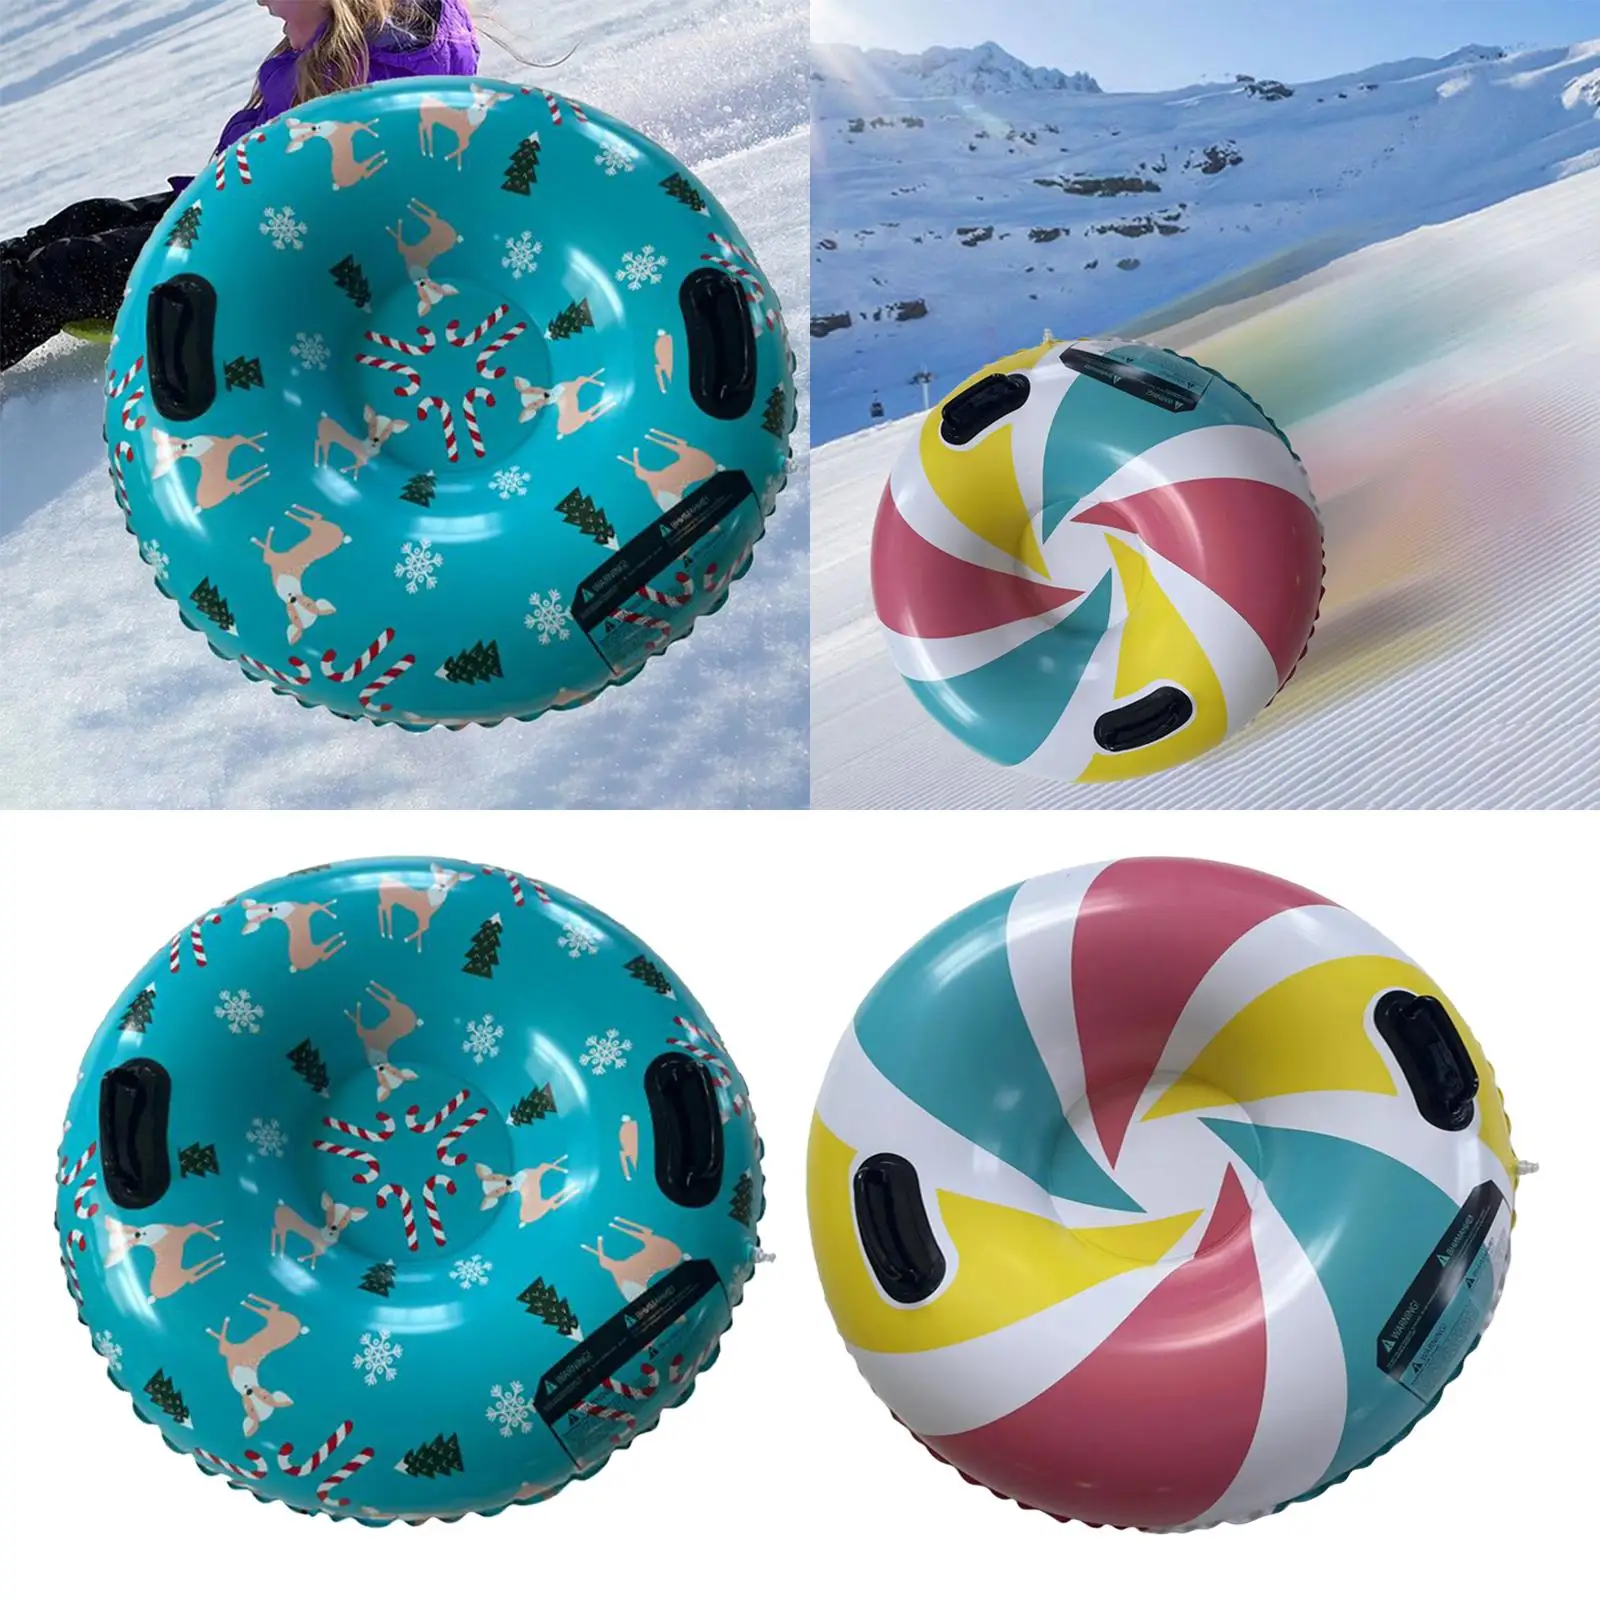 Winter Snow Tube 91cm Sleigh Inflatable Snow Sled for Backyard Children Skiing Sports